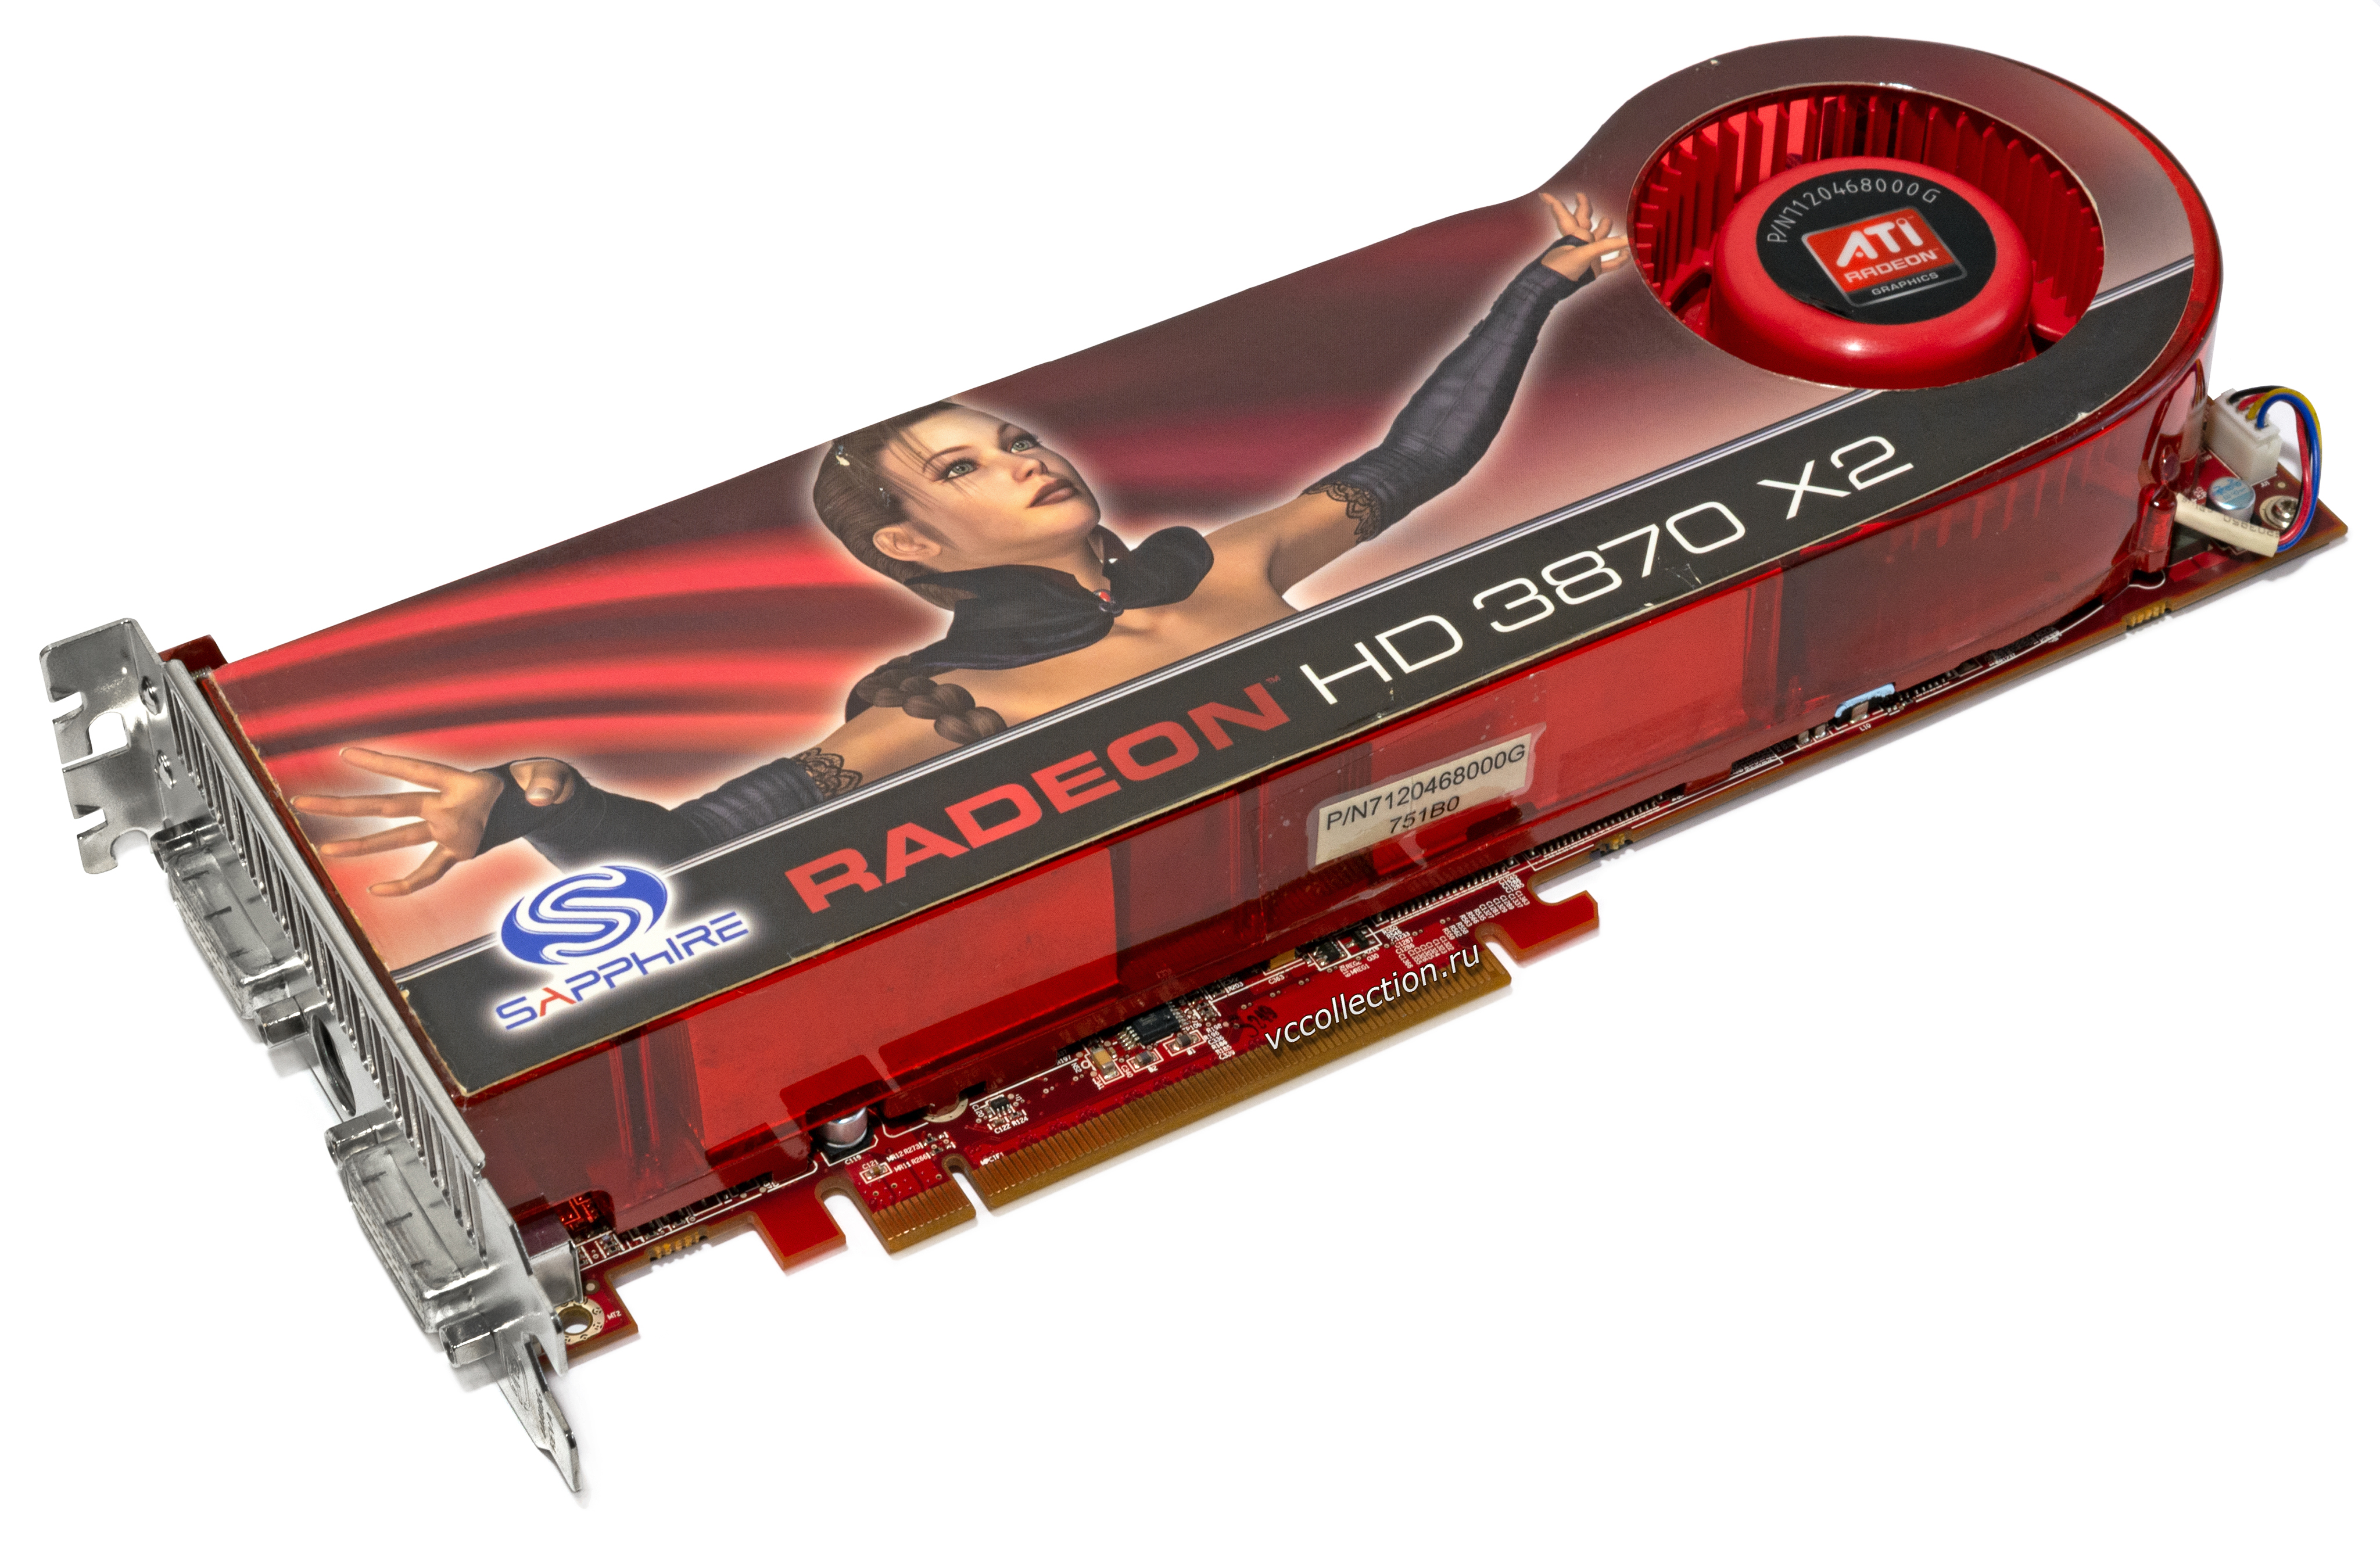 Radeon HD 3870 X2 (Sapphire) BOX.